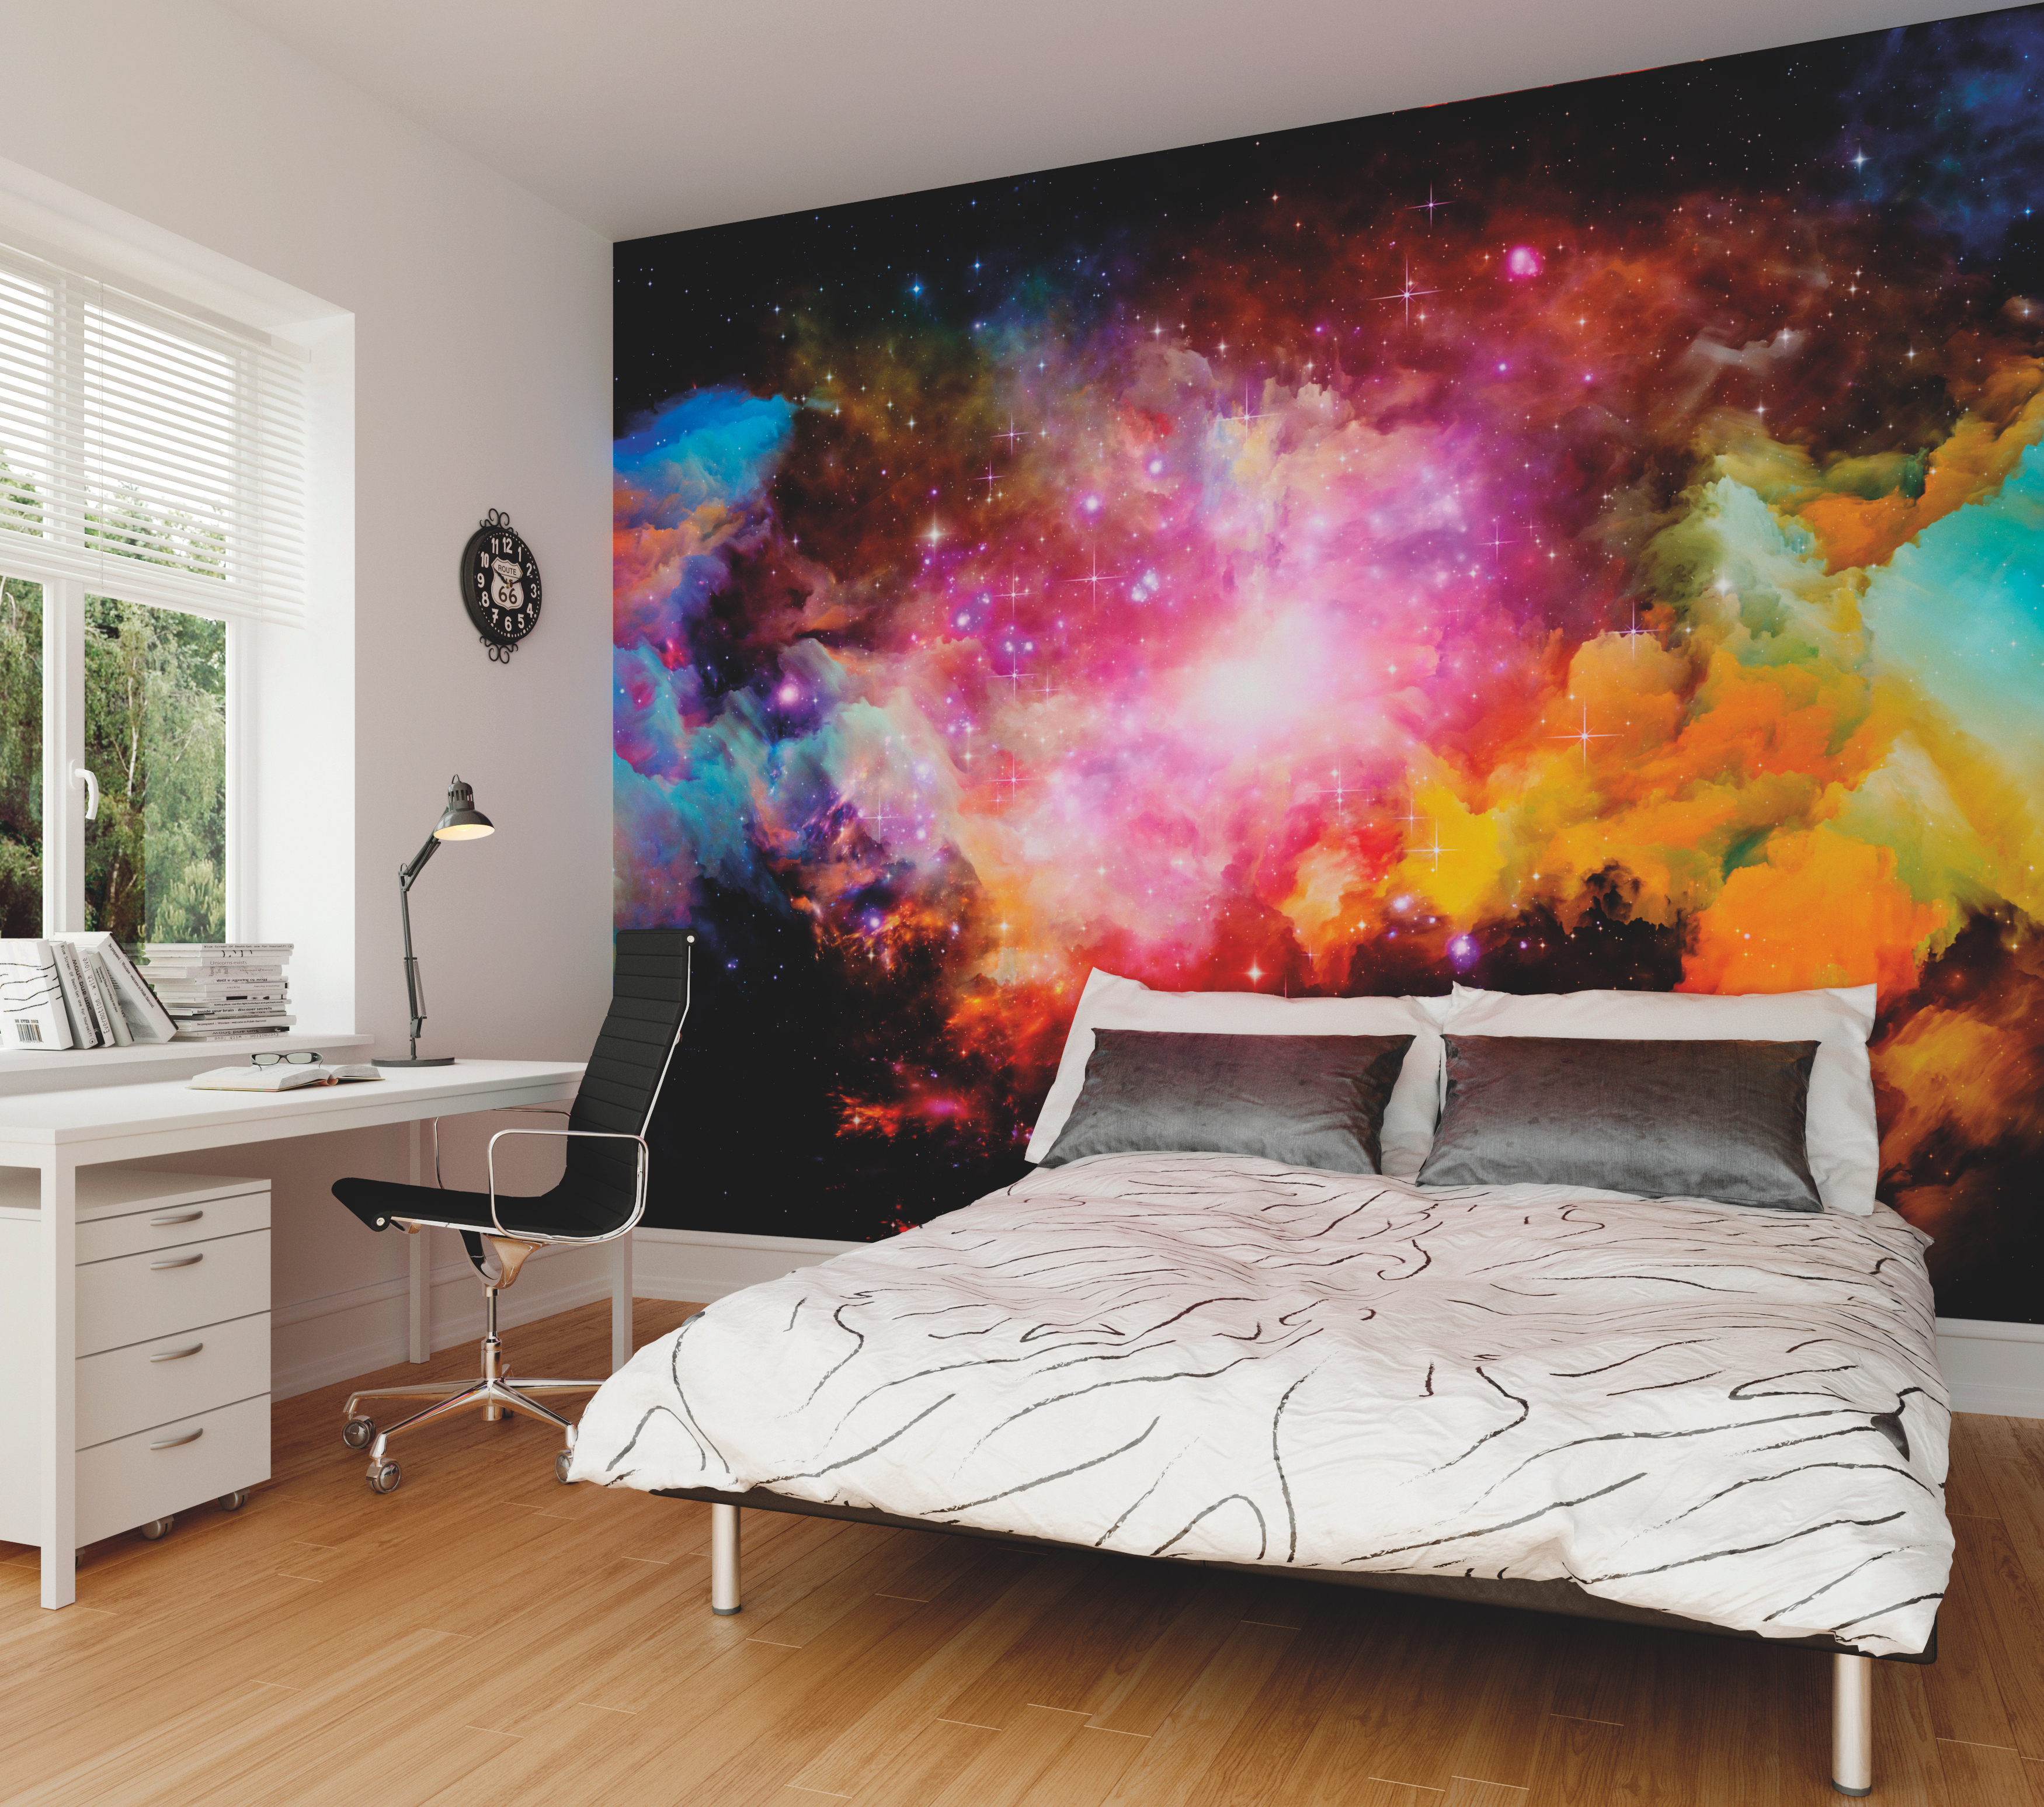 Fototapet Galaxy Stars M, Multi, Origin Murals, 300x240cm  image0